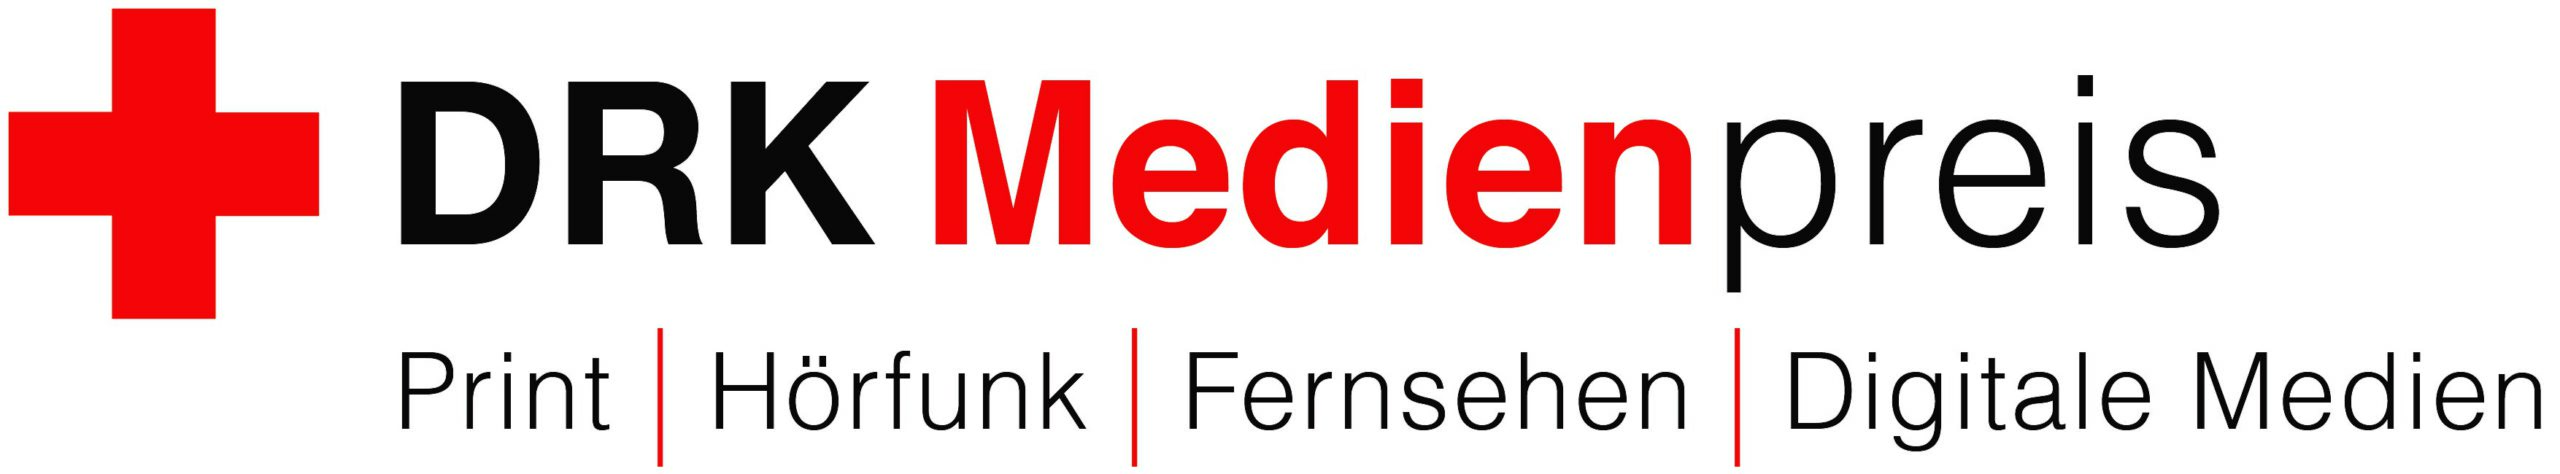 Logo-1-scaled DRK-Medienpreis 2022 - Jetzt bewerben!